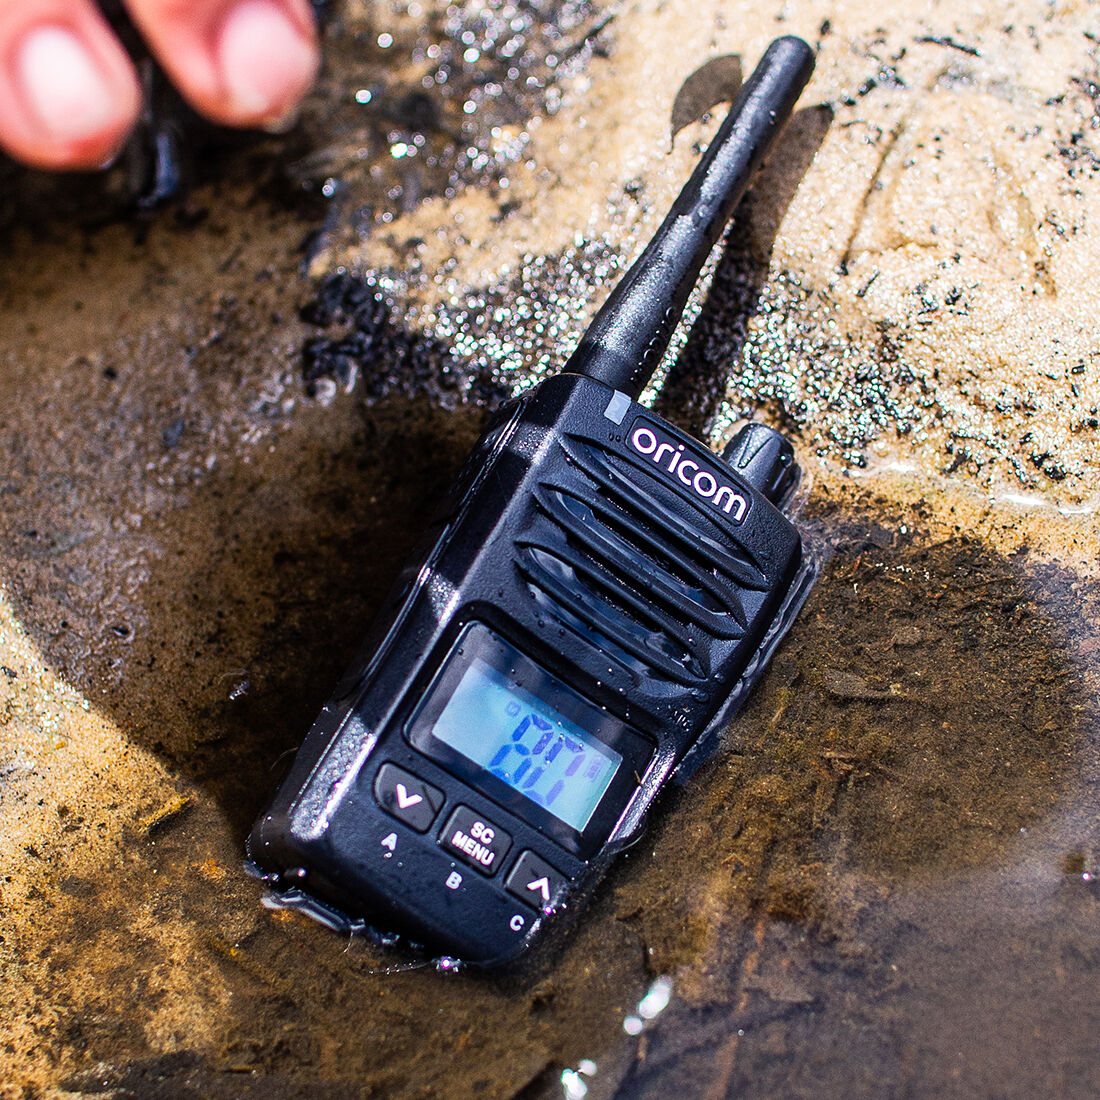 Oricom 5W Waterproof Handheld UHF CB Radio DTX600, , scaau_hi-res